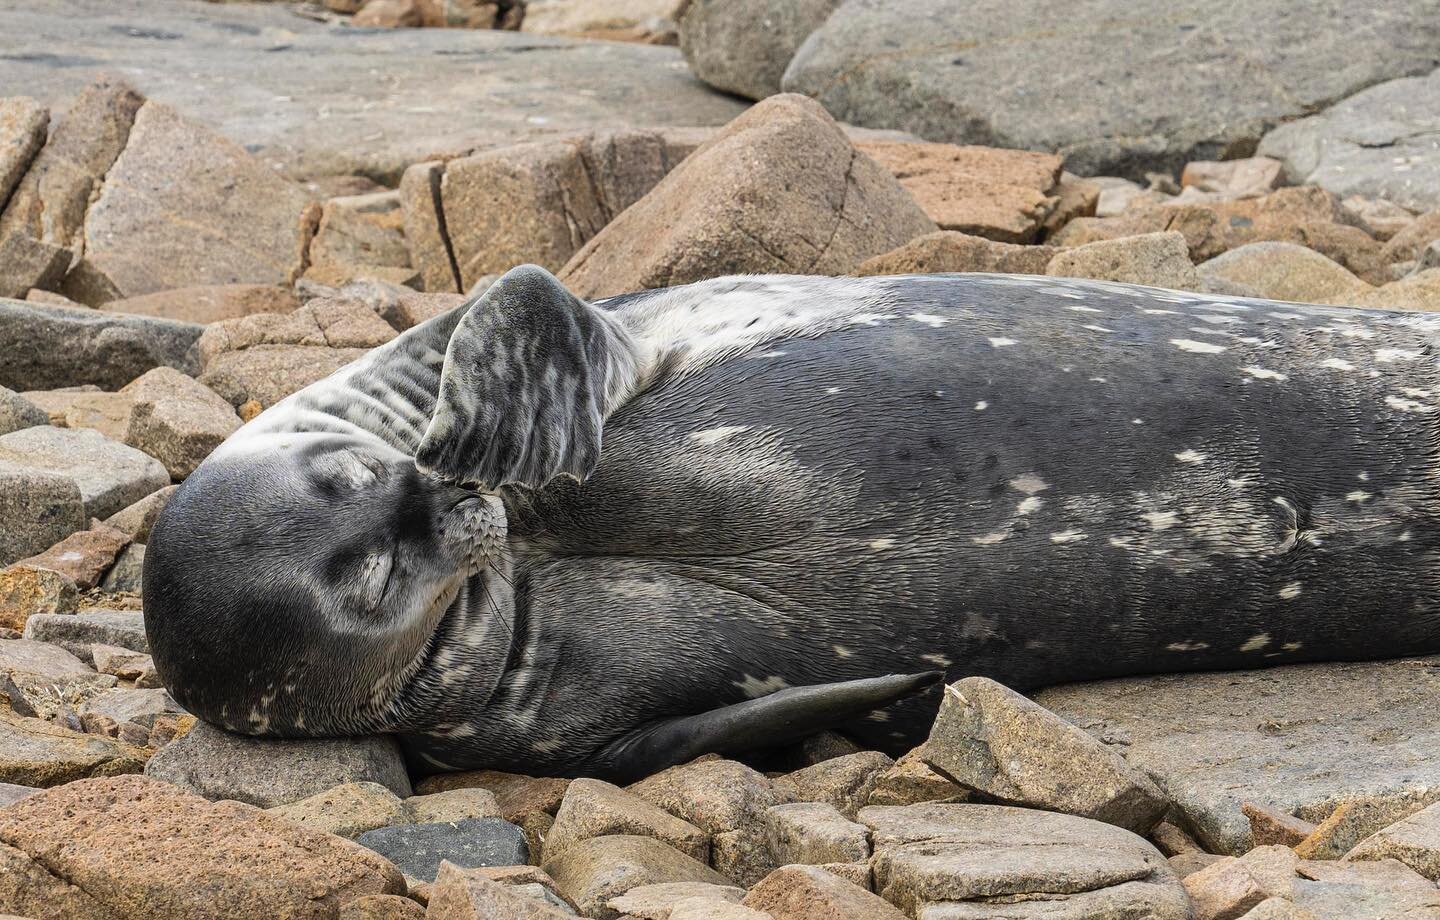 Wedell seal scratching it&rsquo;s nose.
#wedellseal #antarctica #seal #wildlife #hurtigruten